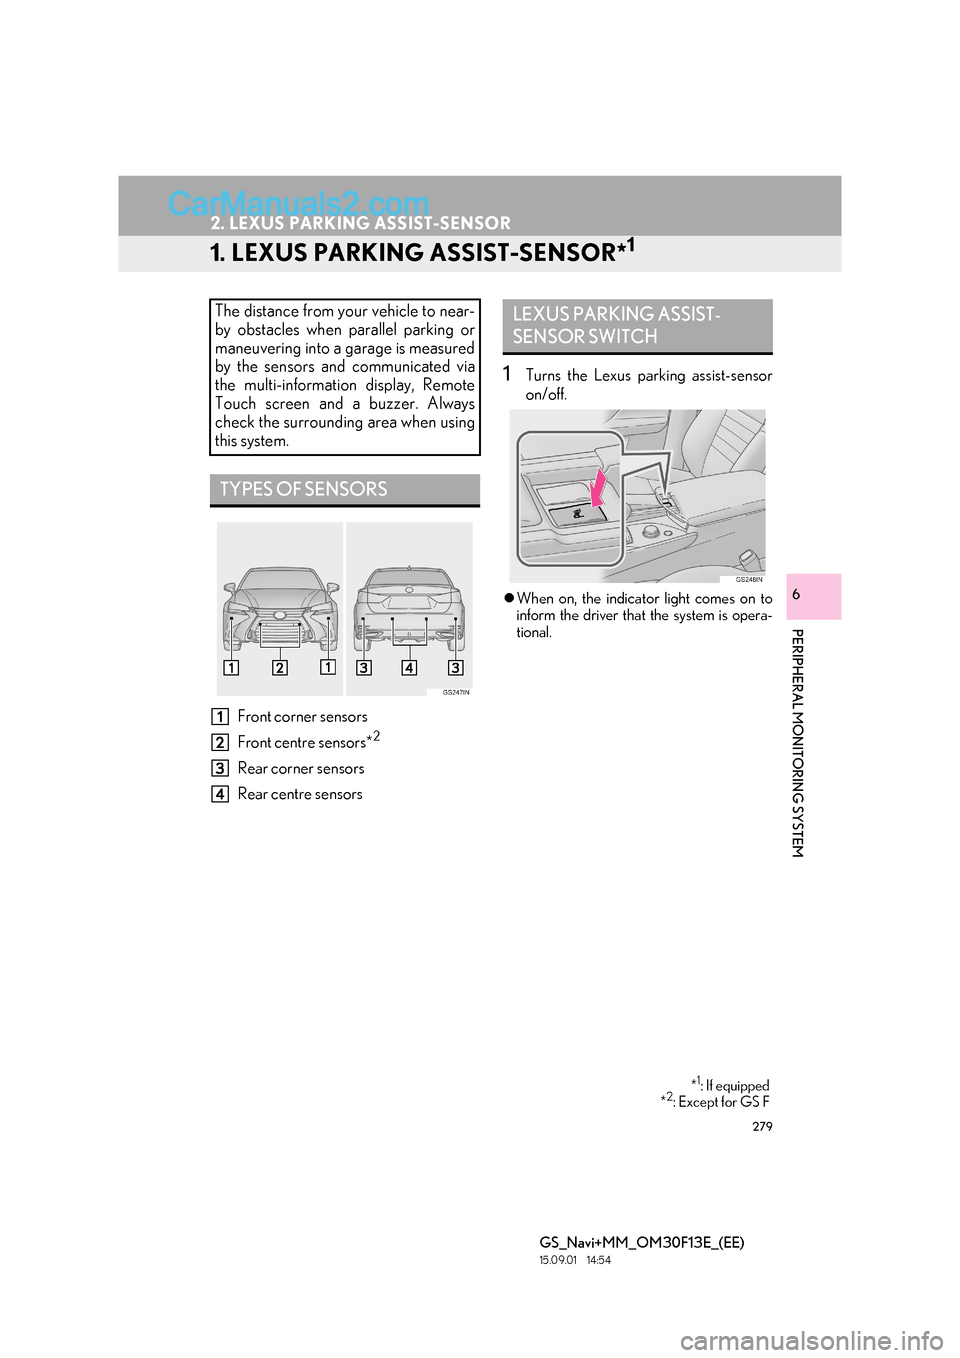 Lexus GS300h 2016  Navigation manual 279
GS_Navi+MM_OM30F13E_(EE)
15.09.01     14:54
PERIPHERAL MONITORING SYSTEM
6
2. LEXUS PARKING ASSIST-SENSOR
1. LEXUS PARKING ASSIST-SENSOR*1
Front corner sensors
Front centre sensors*
2
Rear corner 